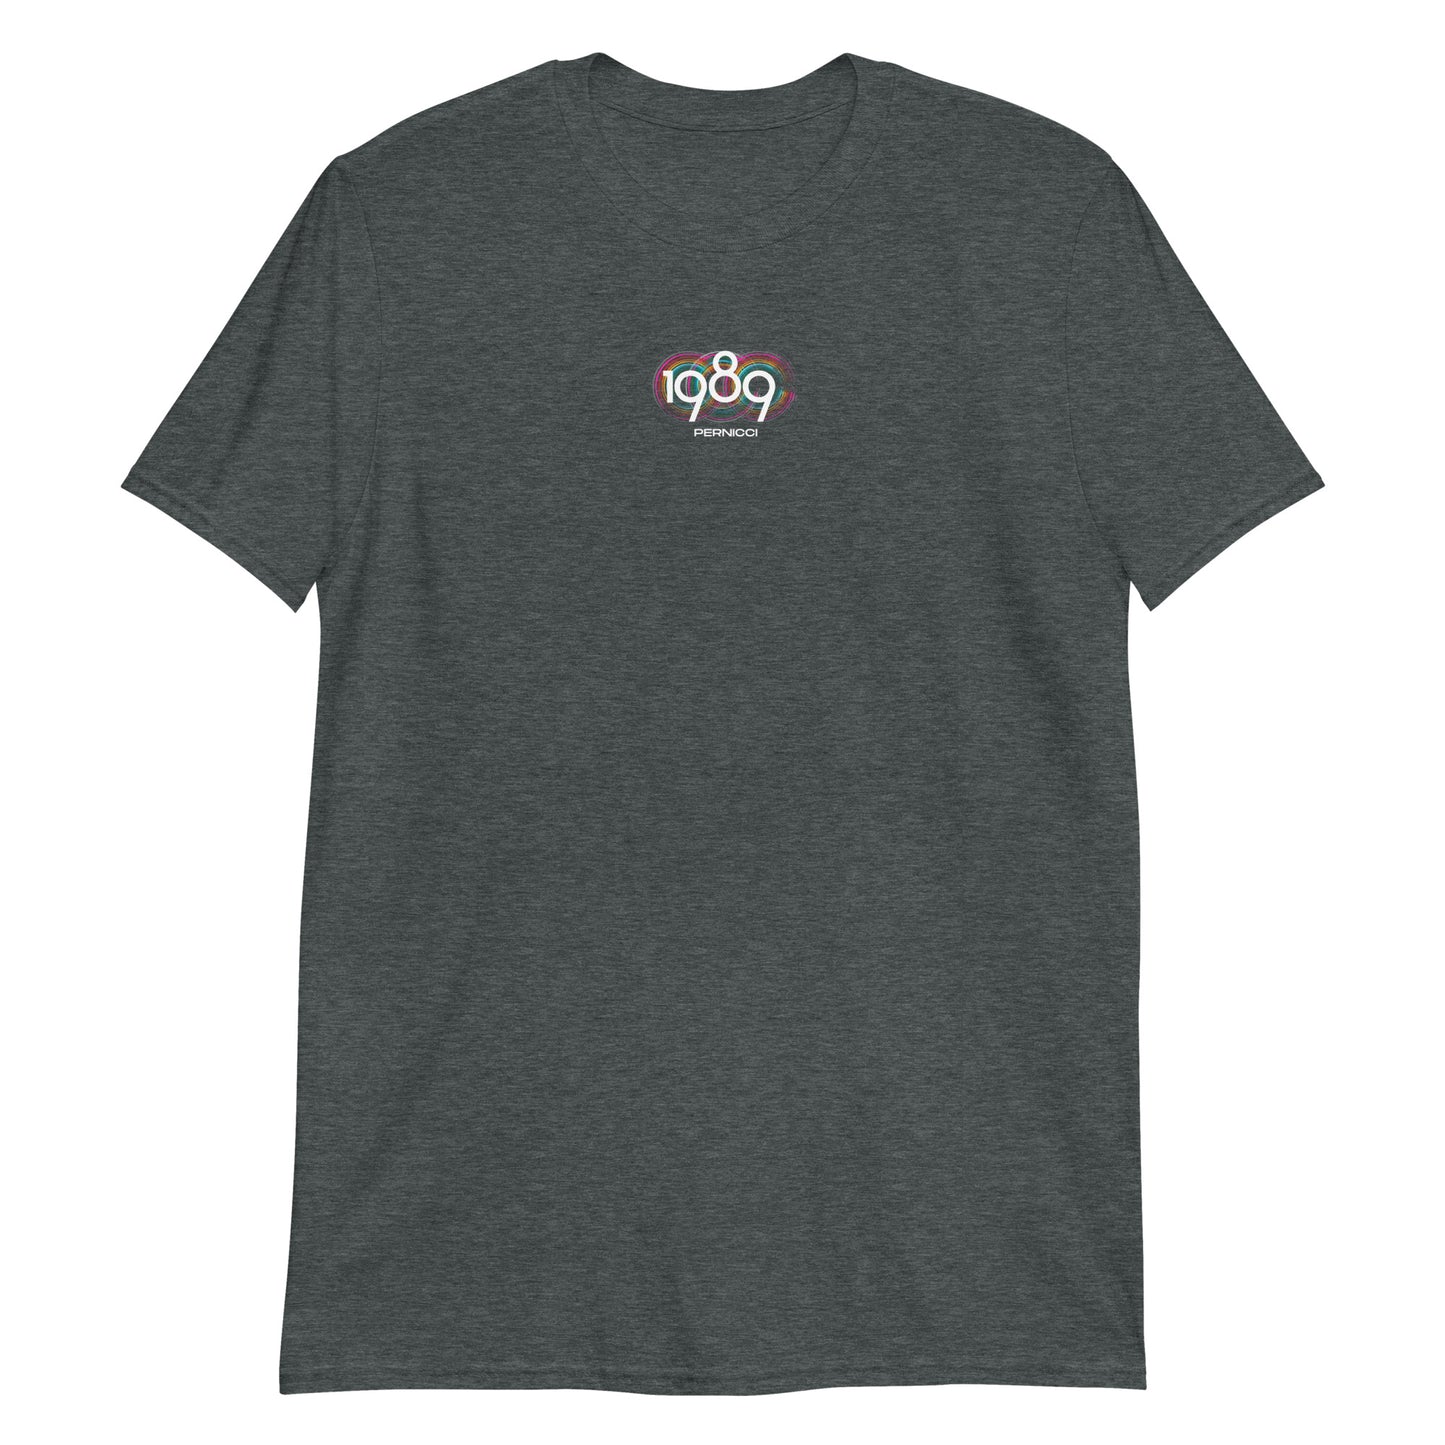 Short-Sleeve Unisex T-Shirt 1989 circle colors